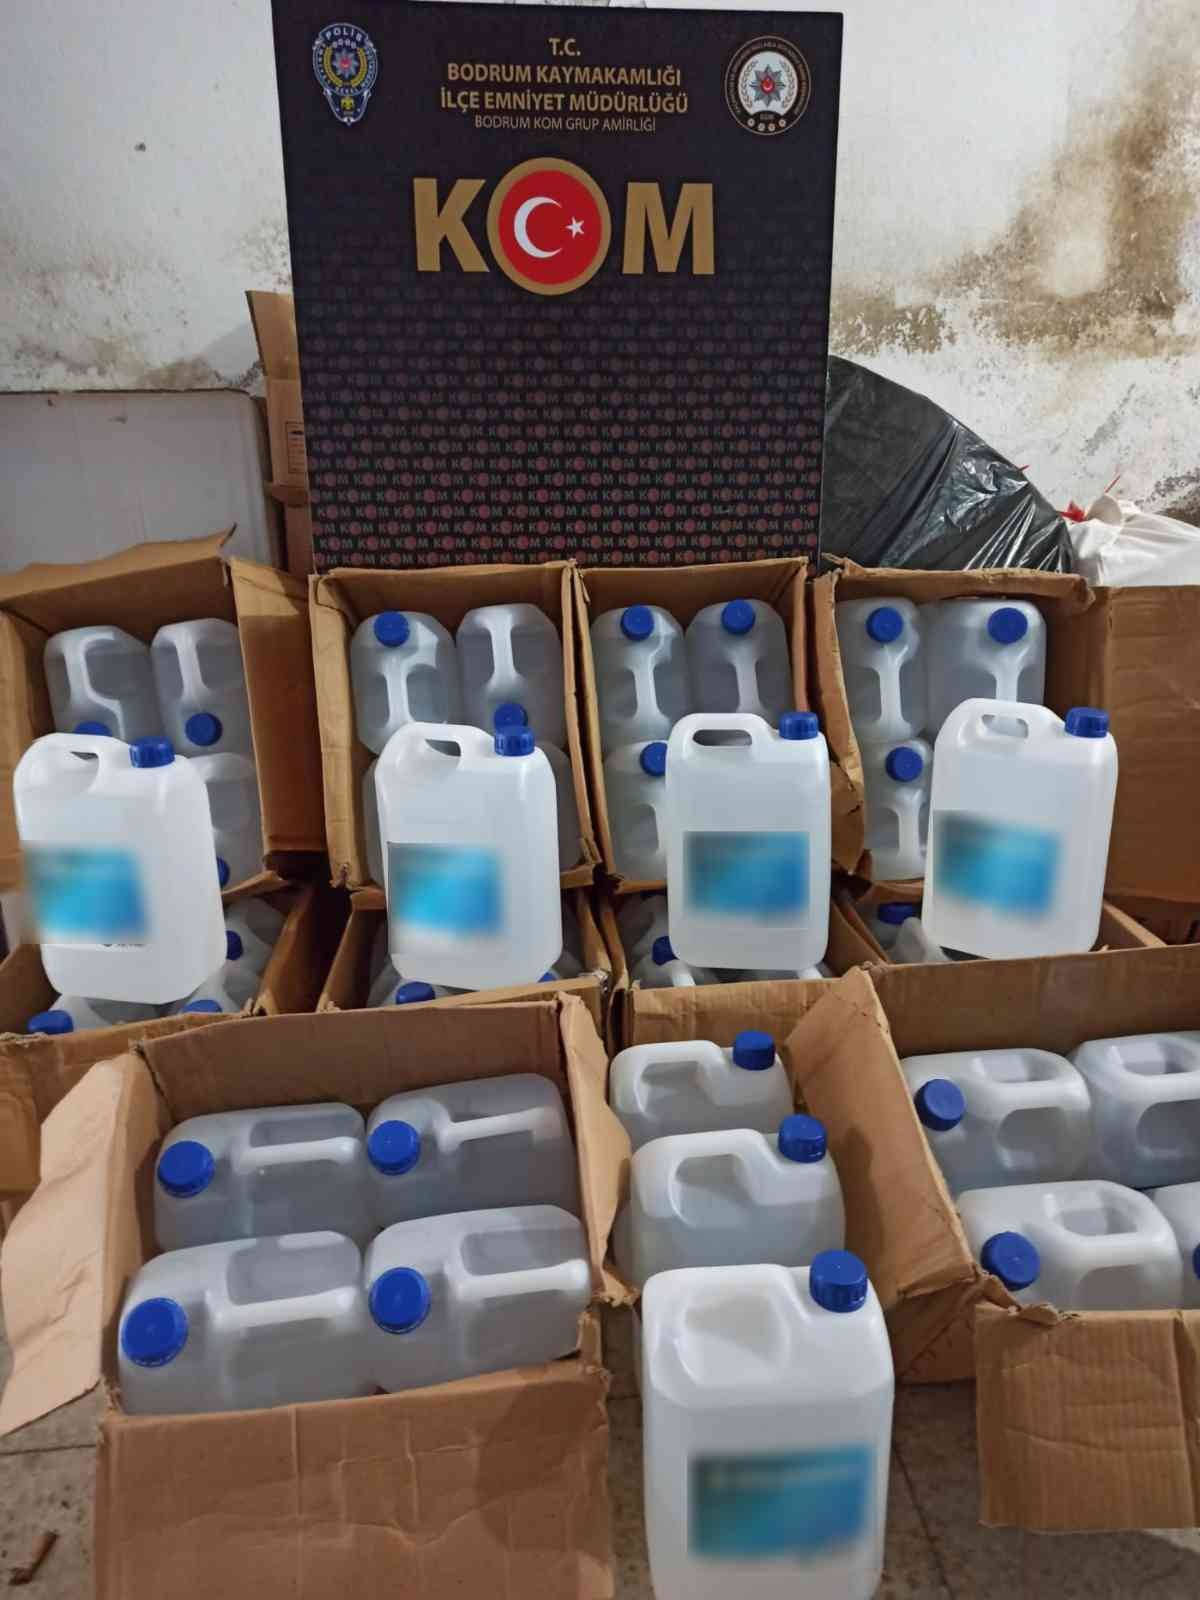 Bodrum’da 235 litre etil alkol ele geçirildi #mugla